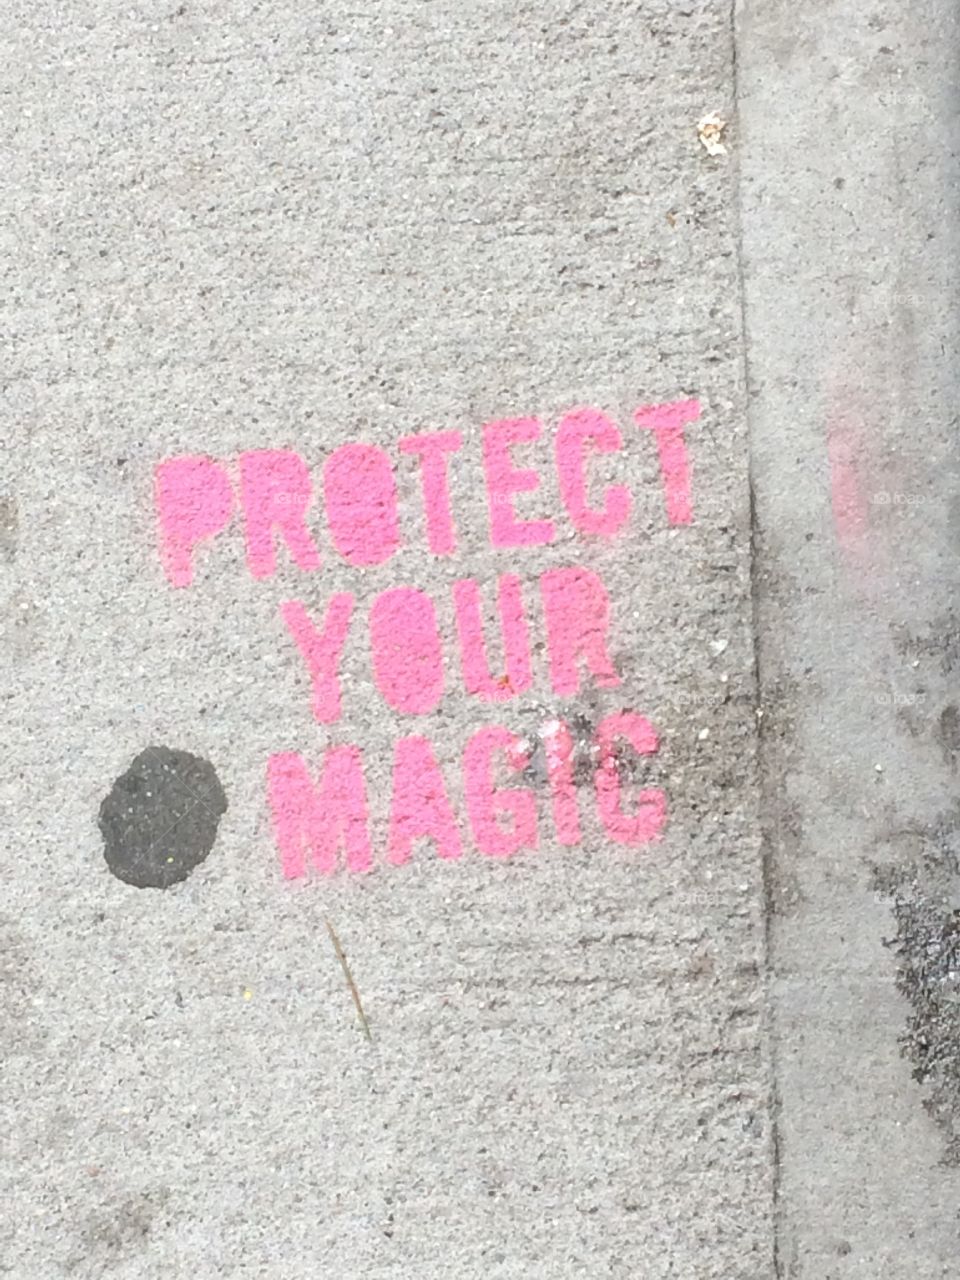 Protect your magic pink graffiti street art  